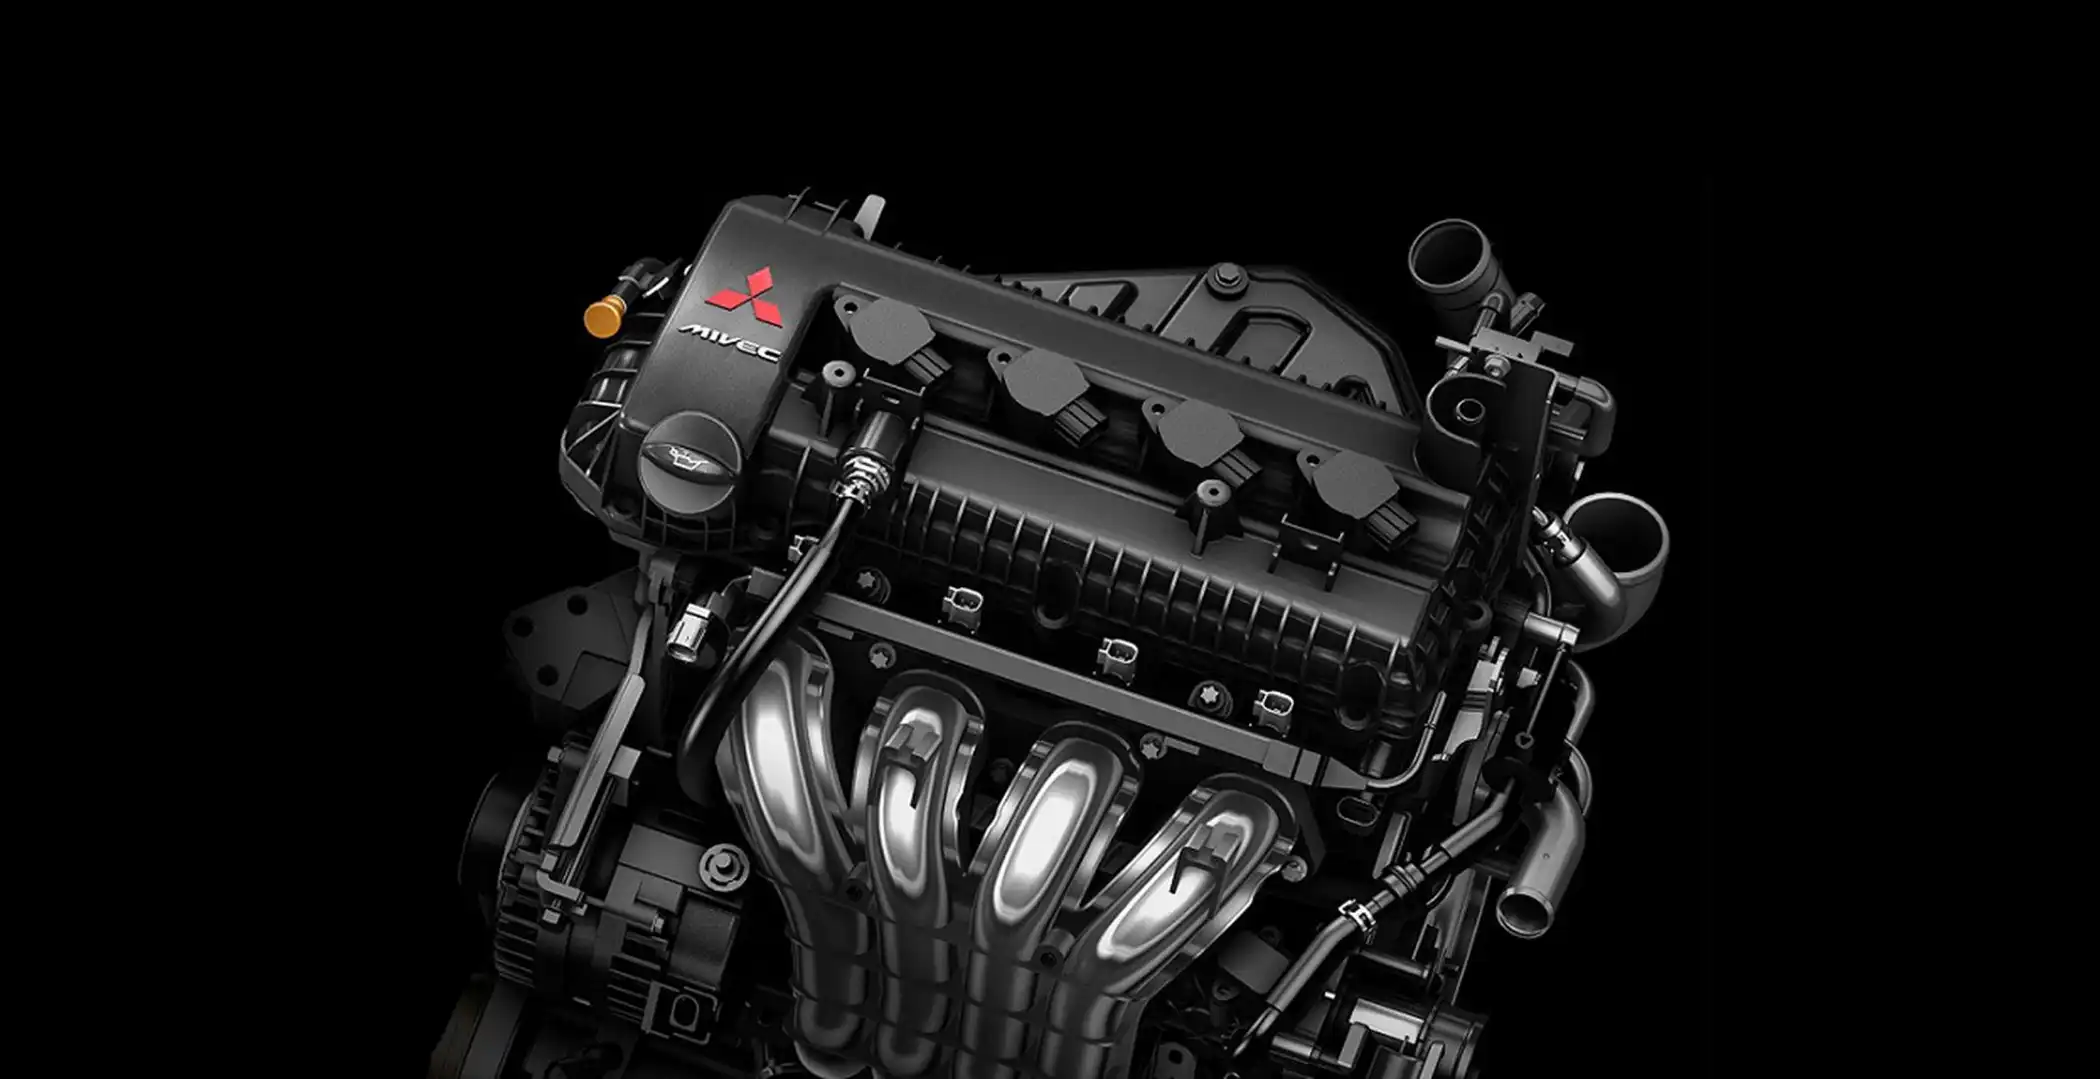 SUV Económico Soueast DX3 Confort, Motor Mitsubishi 1.5 L Turbo